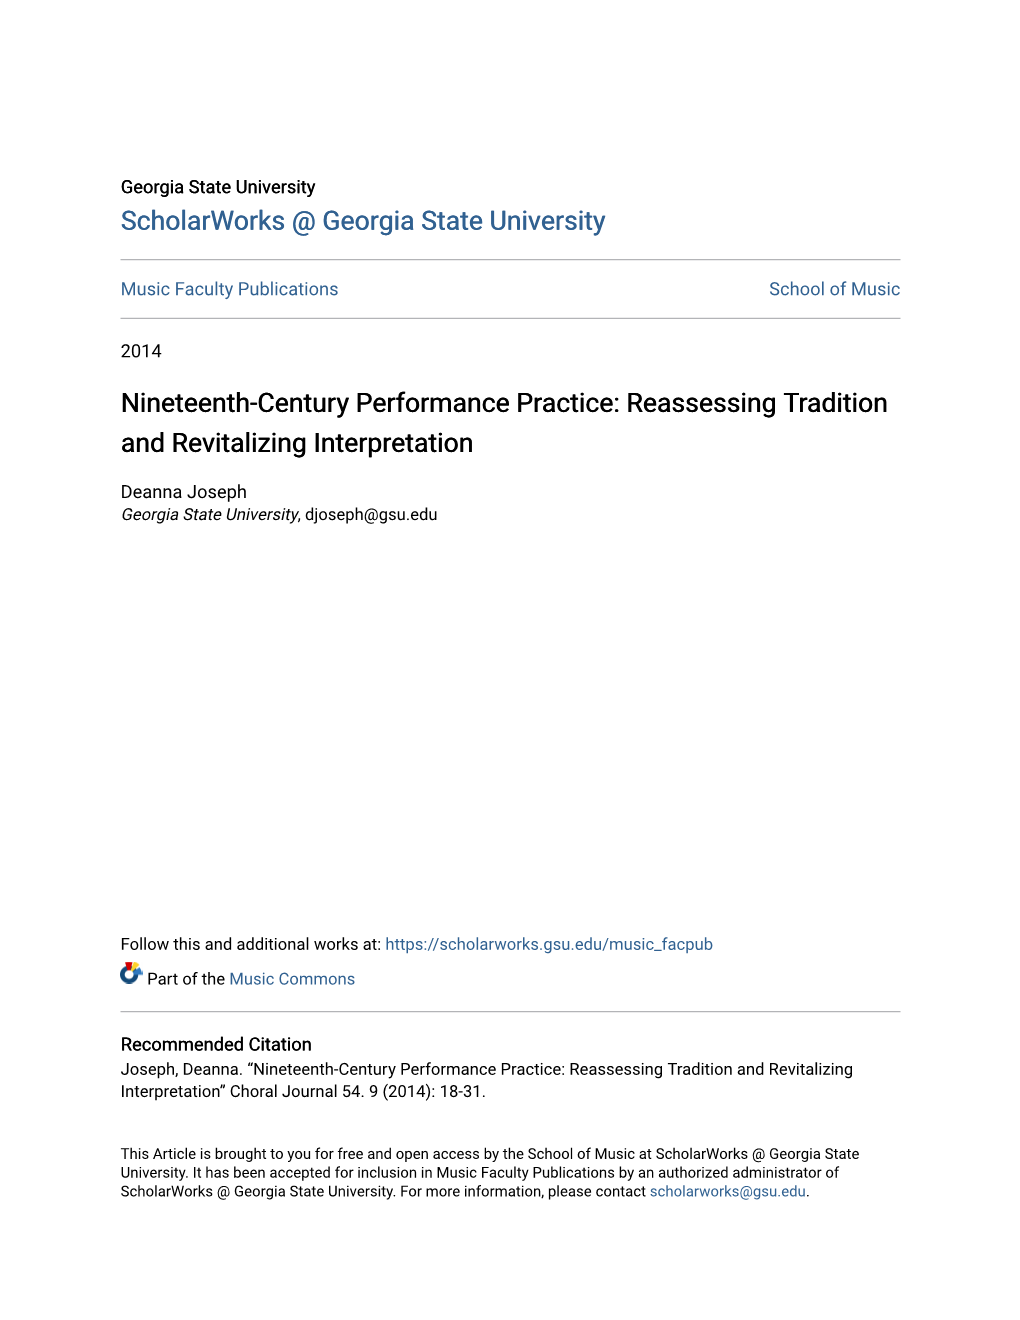 Nineteenth-Century Performance Practice: Reassessing Tradition and Revitalizing Interpretation